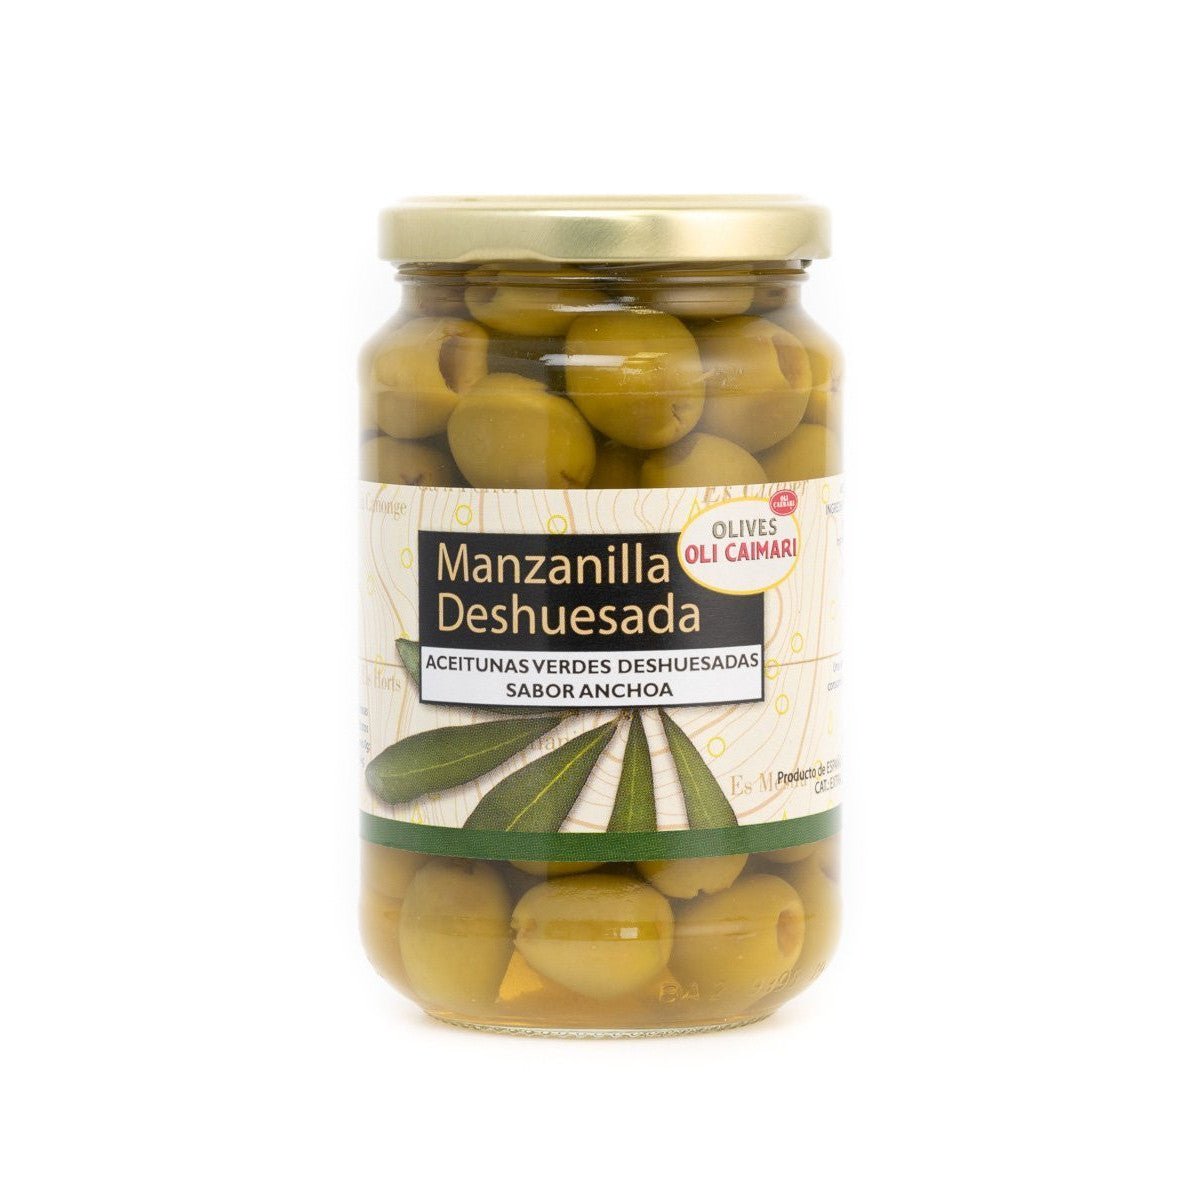 Entkernte grüne Oliven mit Anchovis Geschmack (160g) - Gourmet Markt - Olives Oli Caimari